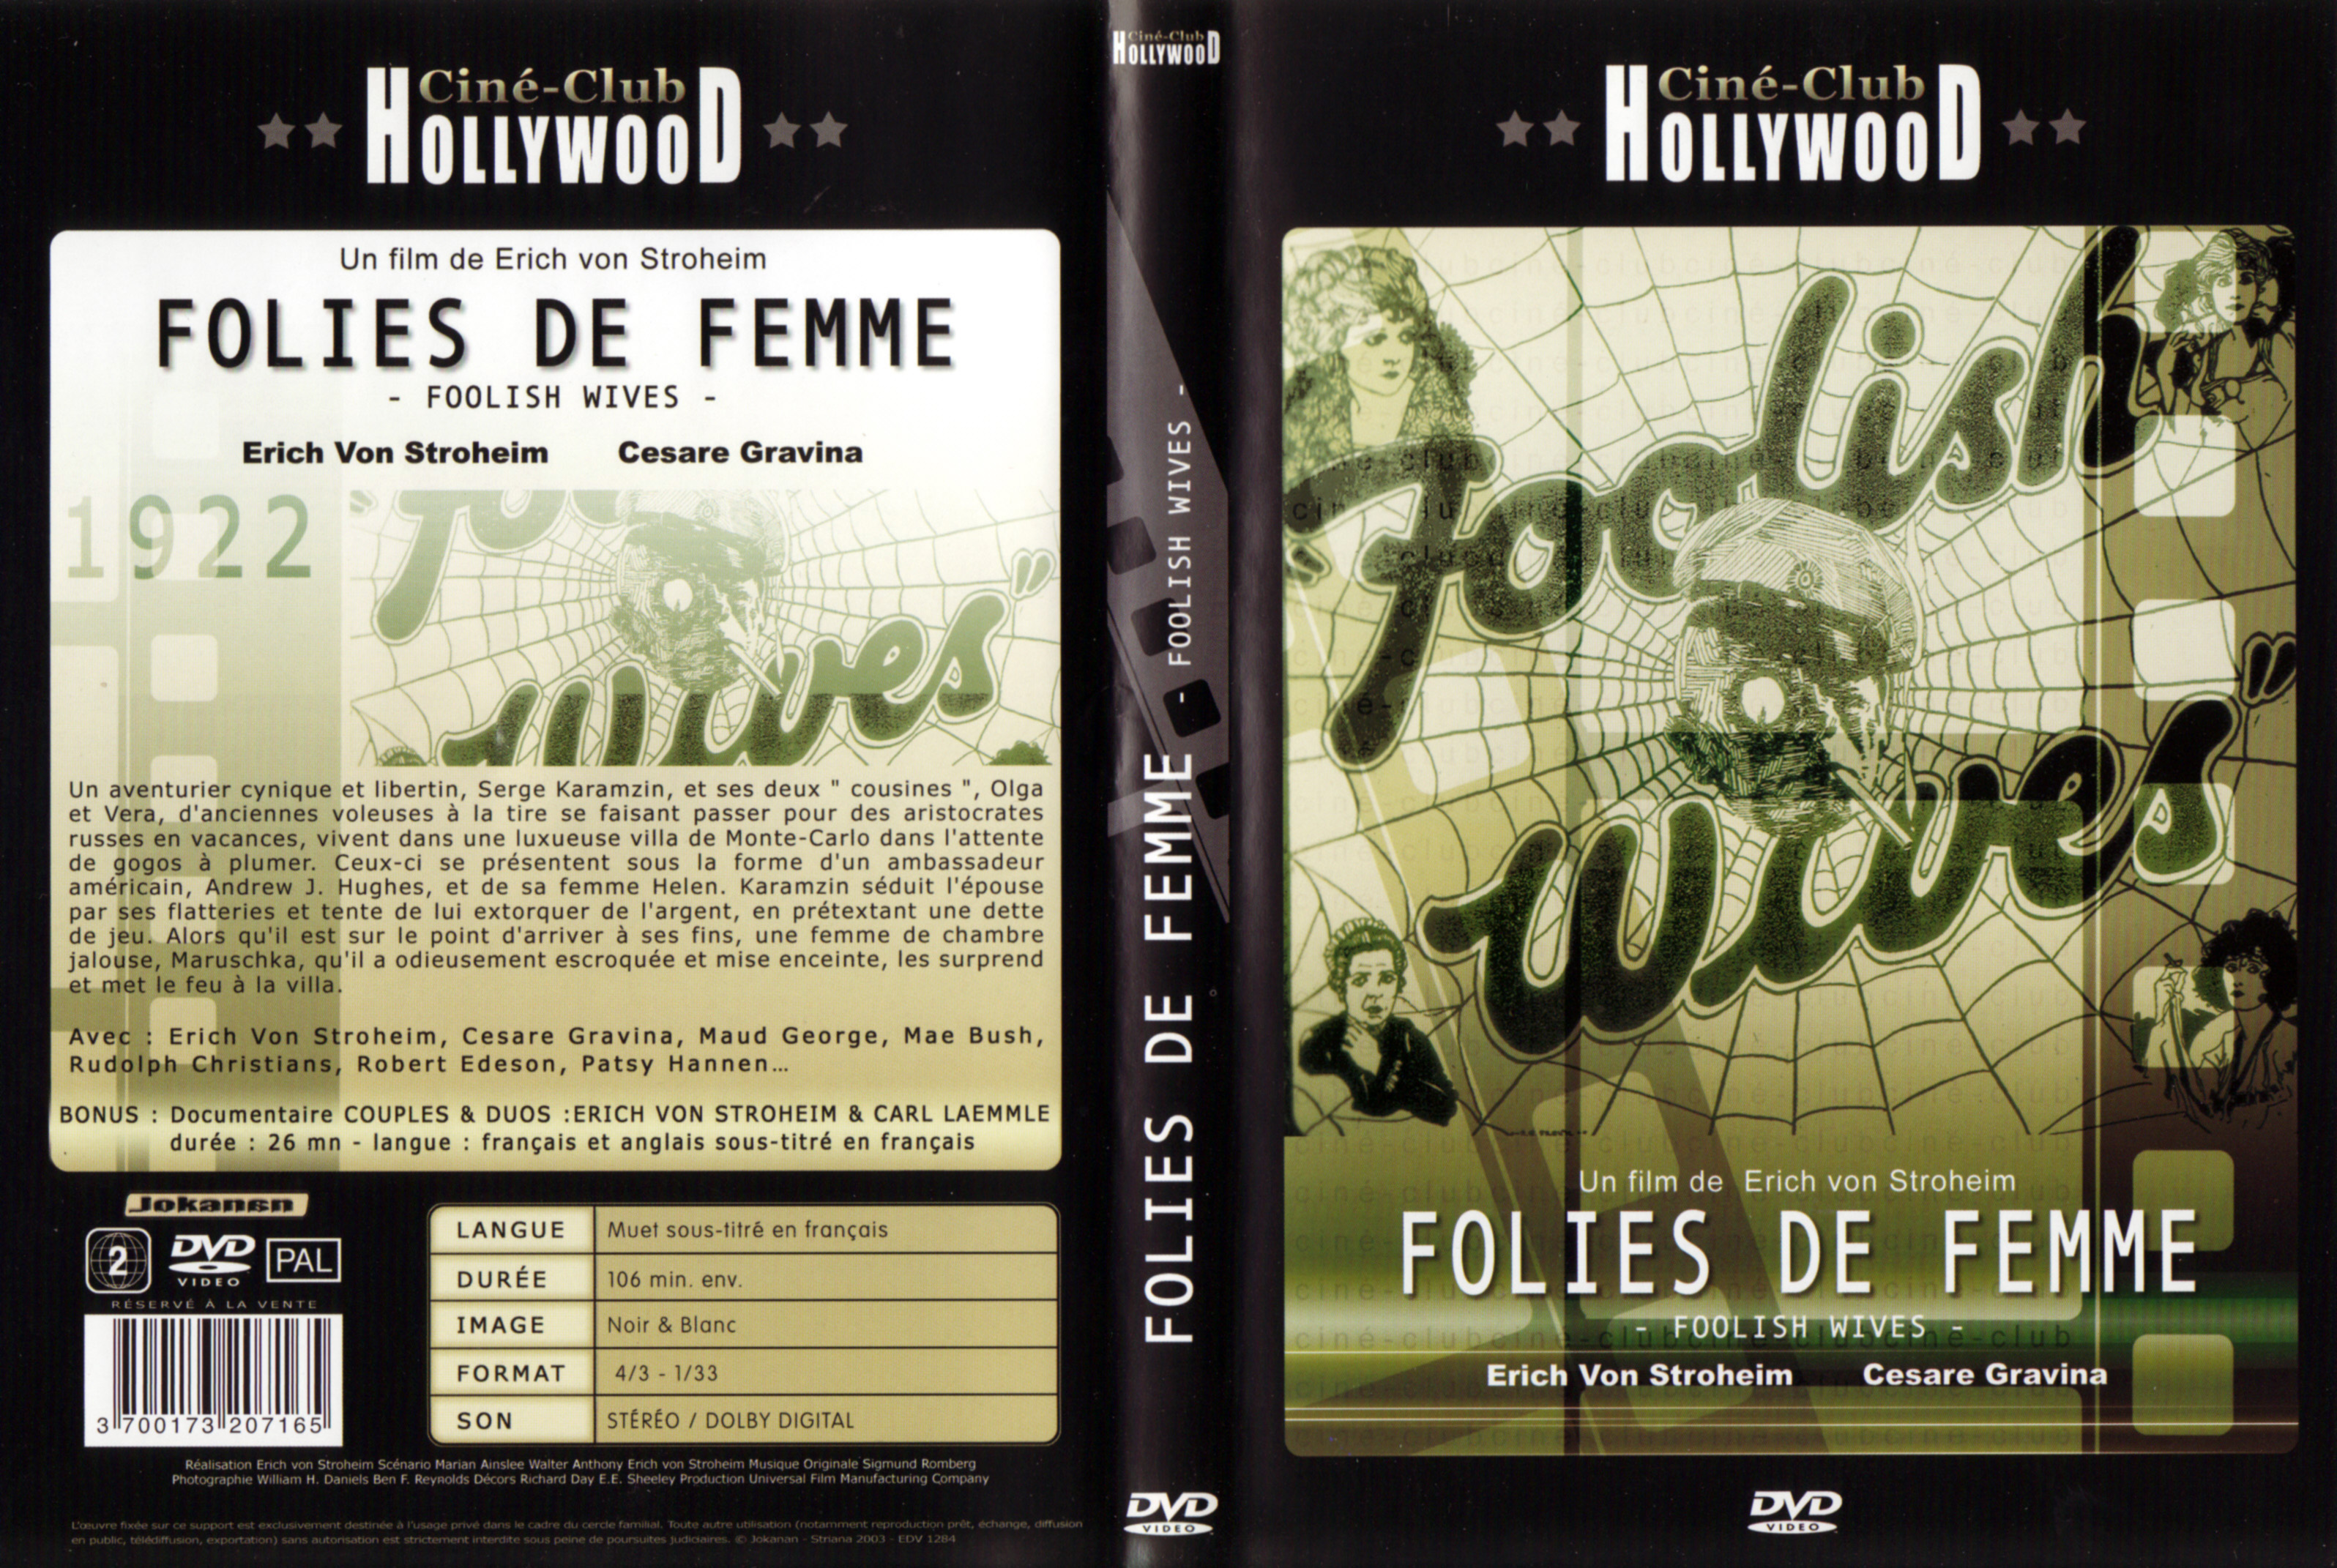 Jaquette DVD Folies de femmes v2